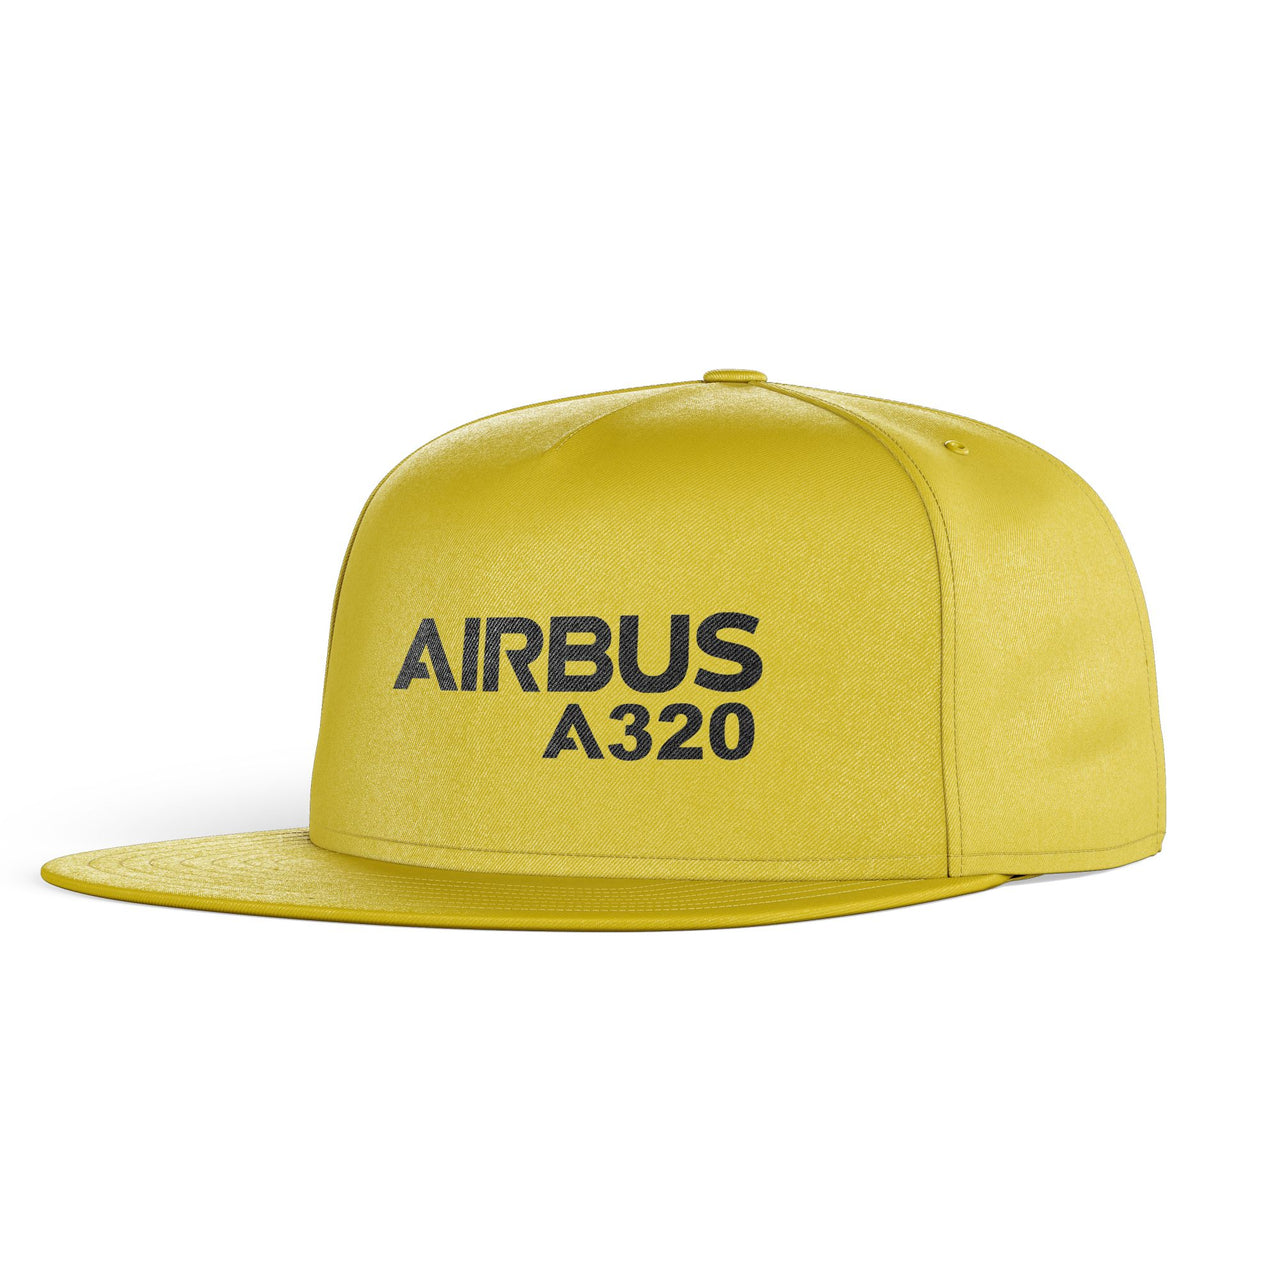 Airbus A320 & Text Designed Snapback Caps & Hats